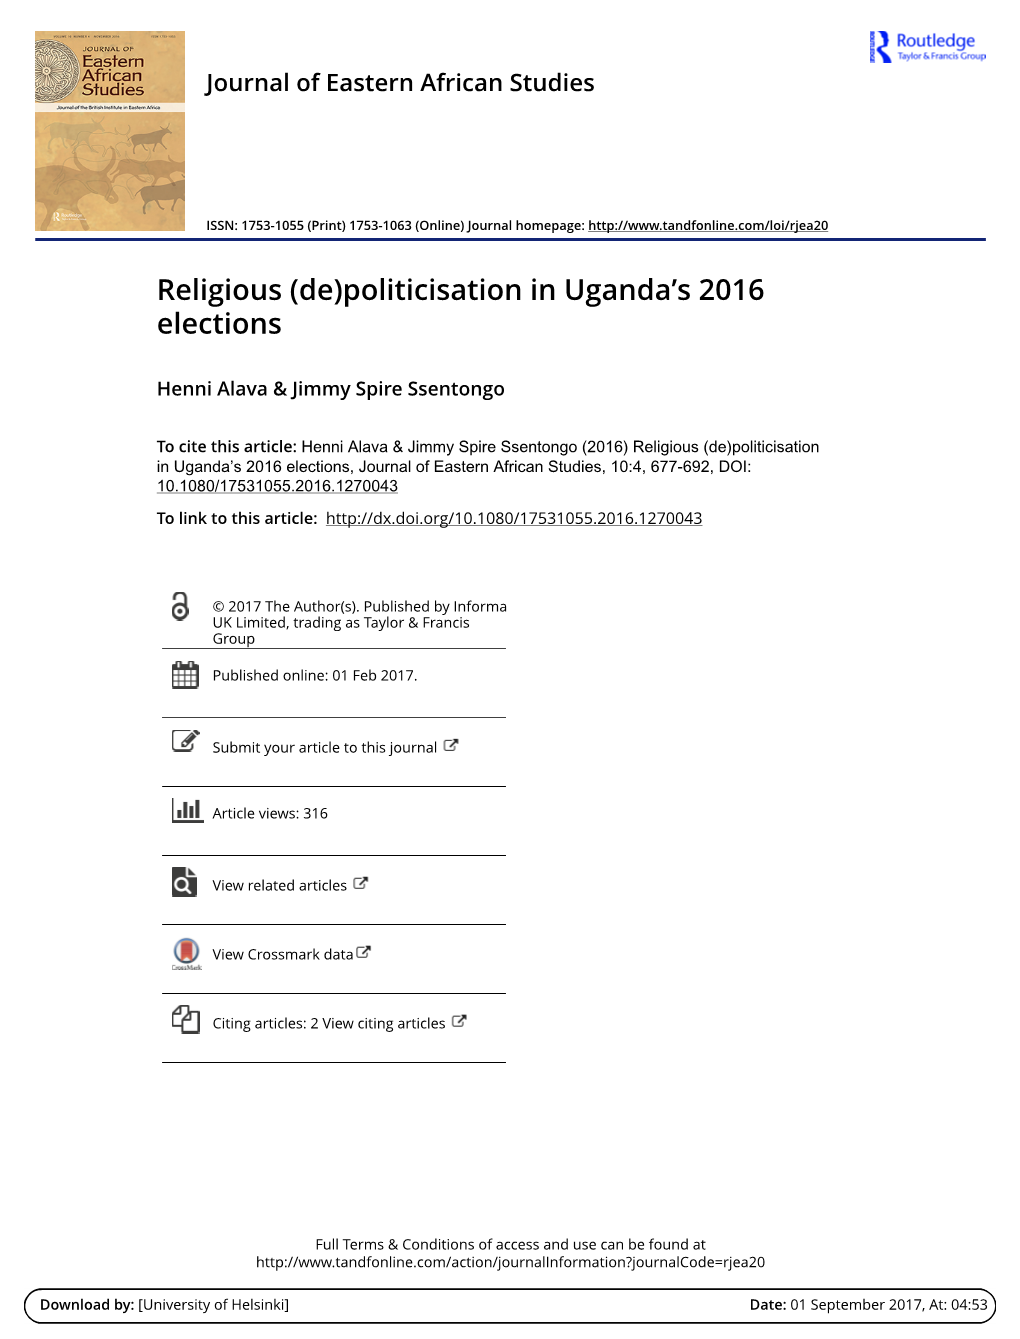 Religious (De)Politicisation in Uganda's 2016 Elections